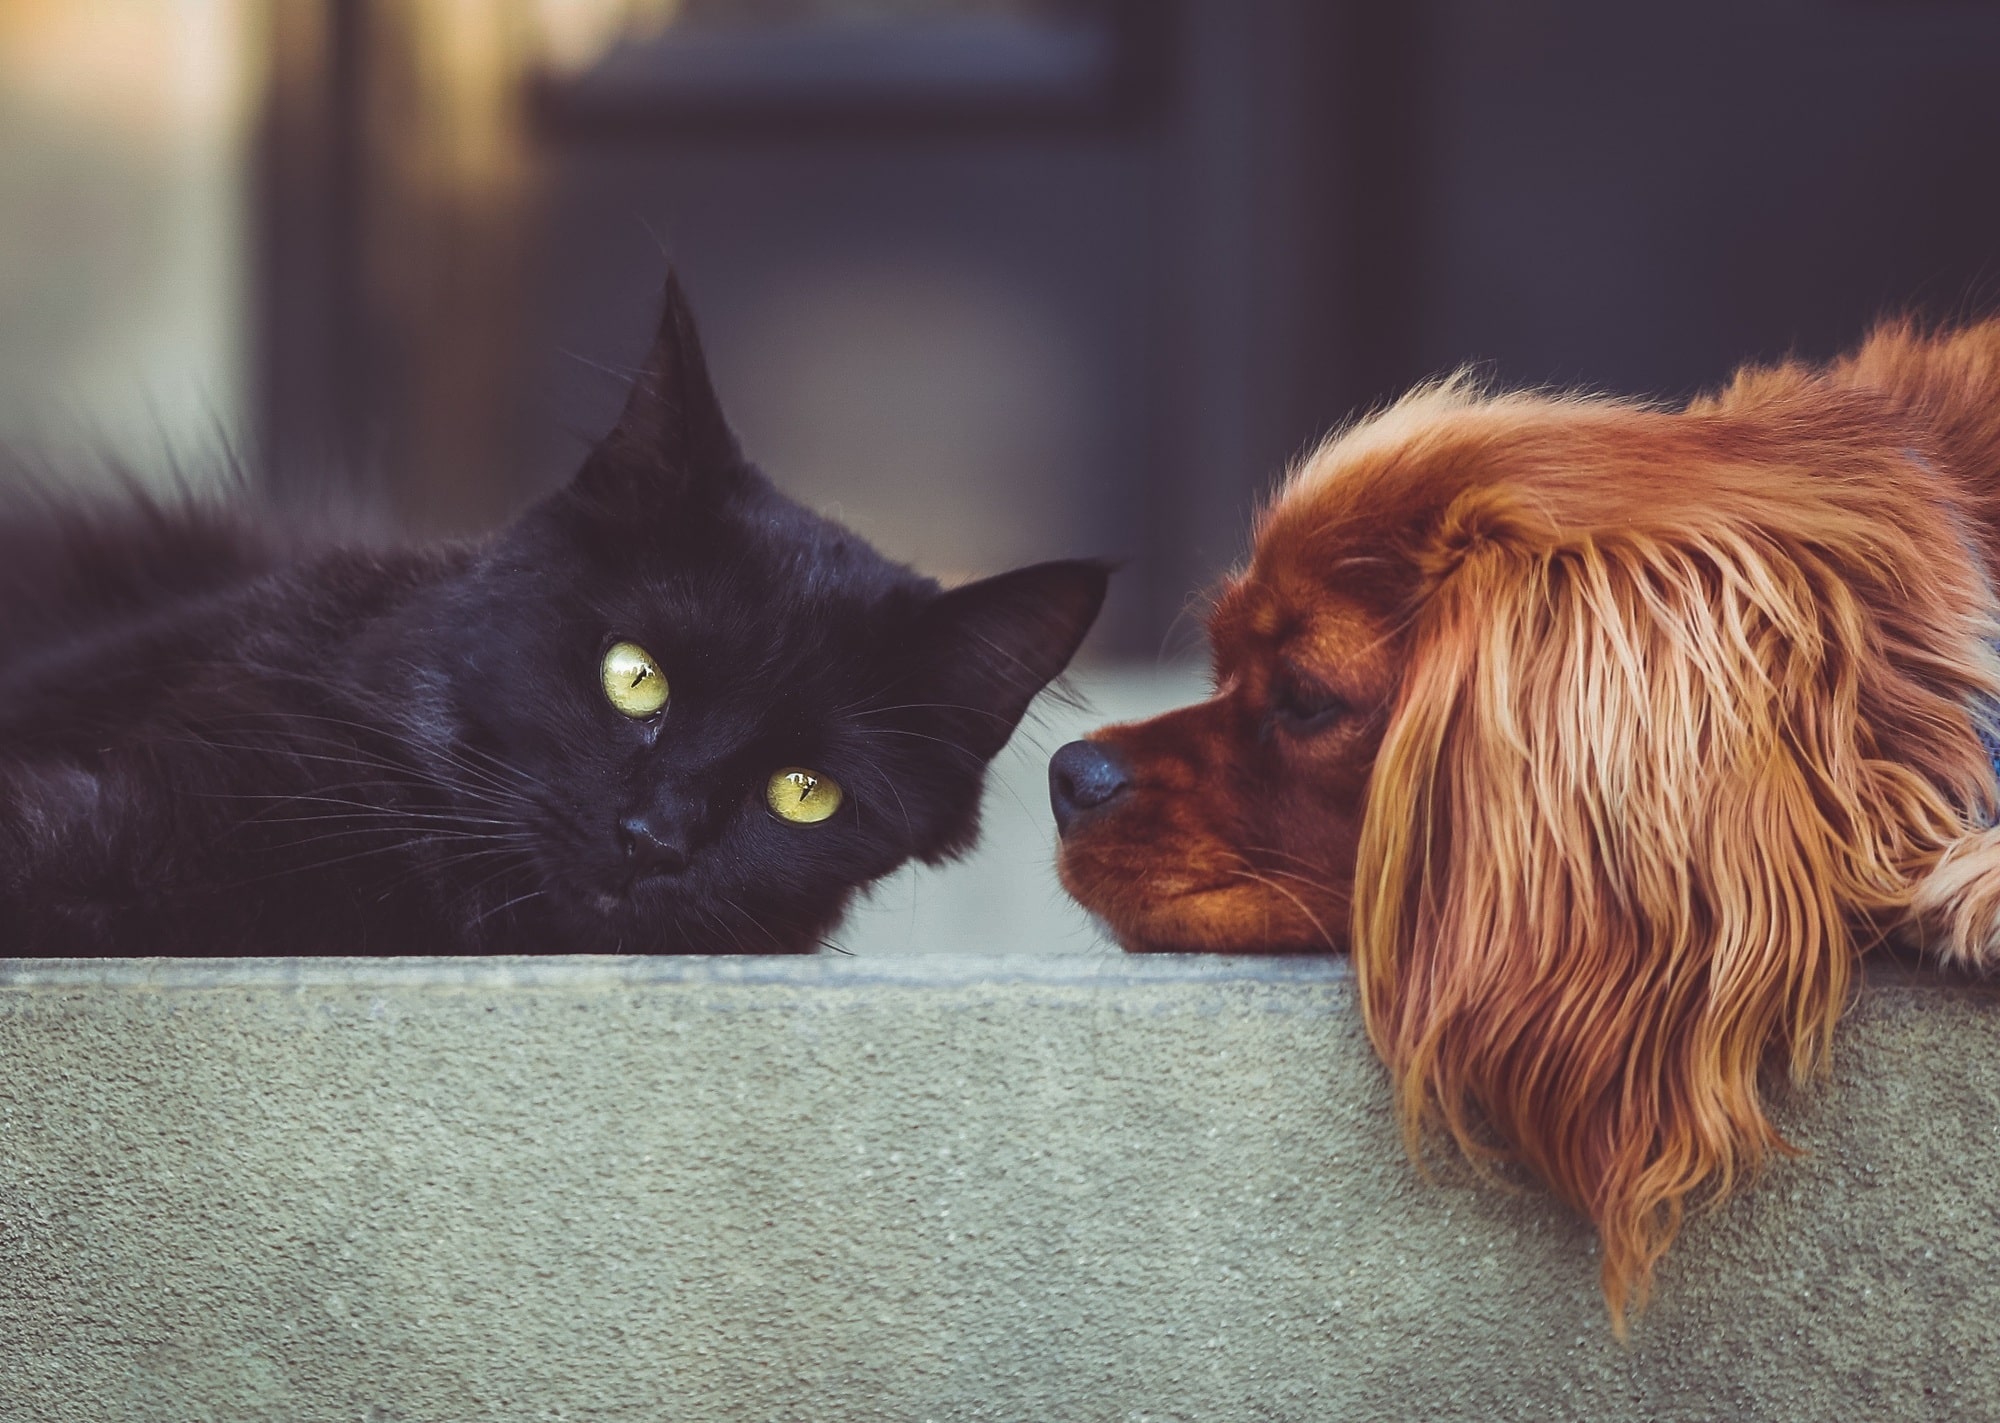 Managing Rental Properties: Should You Allow Pets?